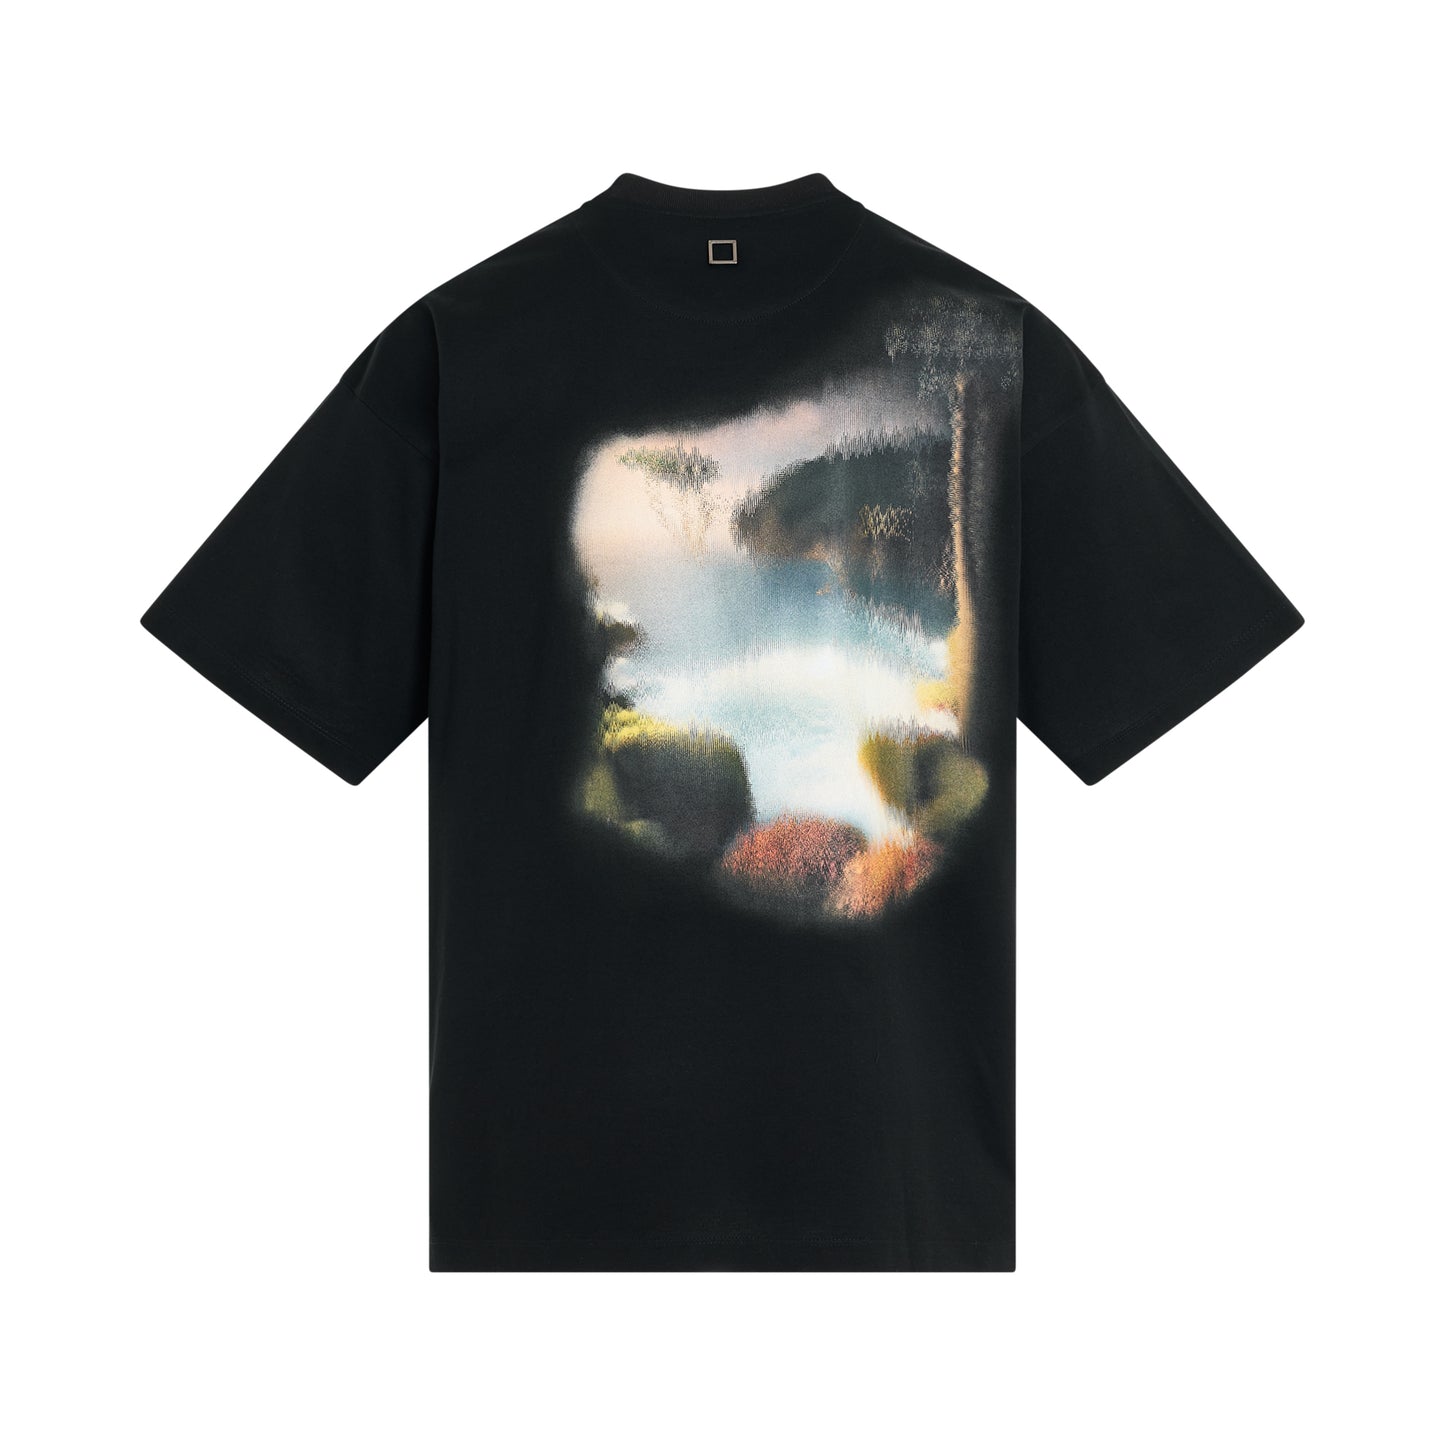 Scenery Print T-Shirt in Black